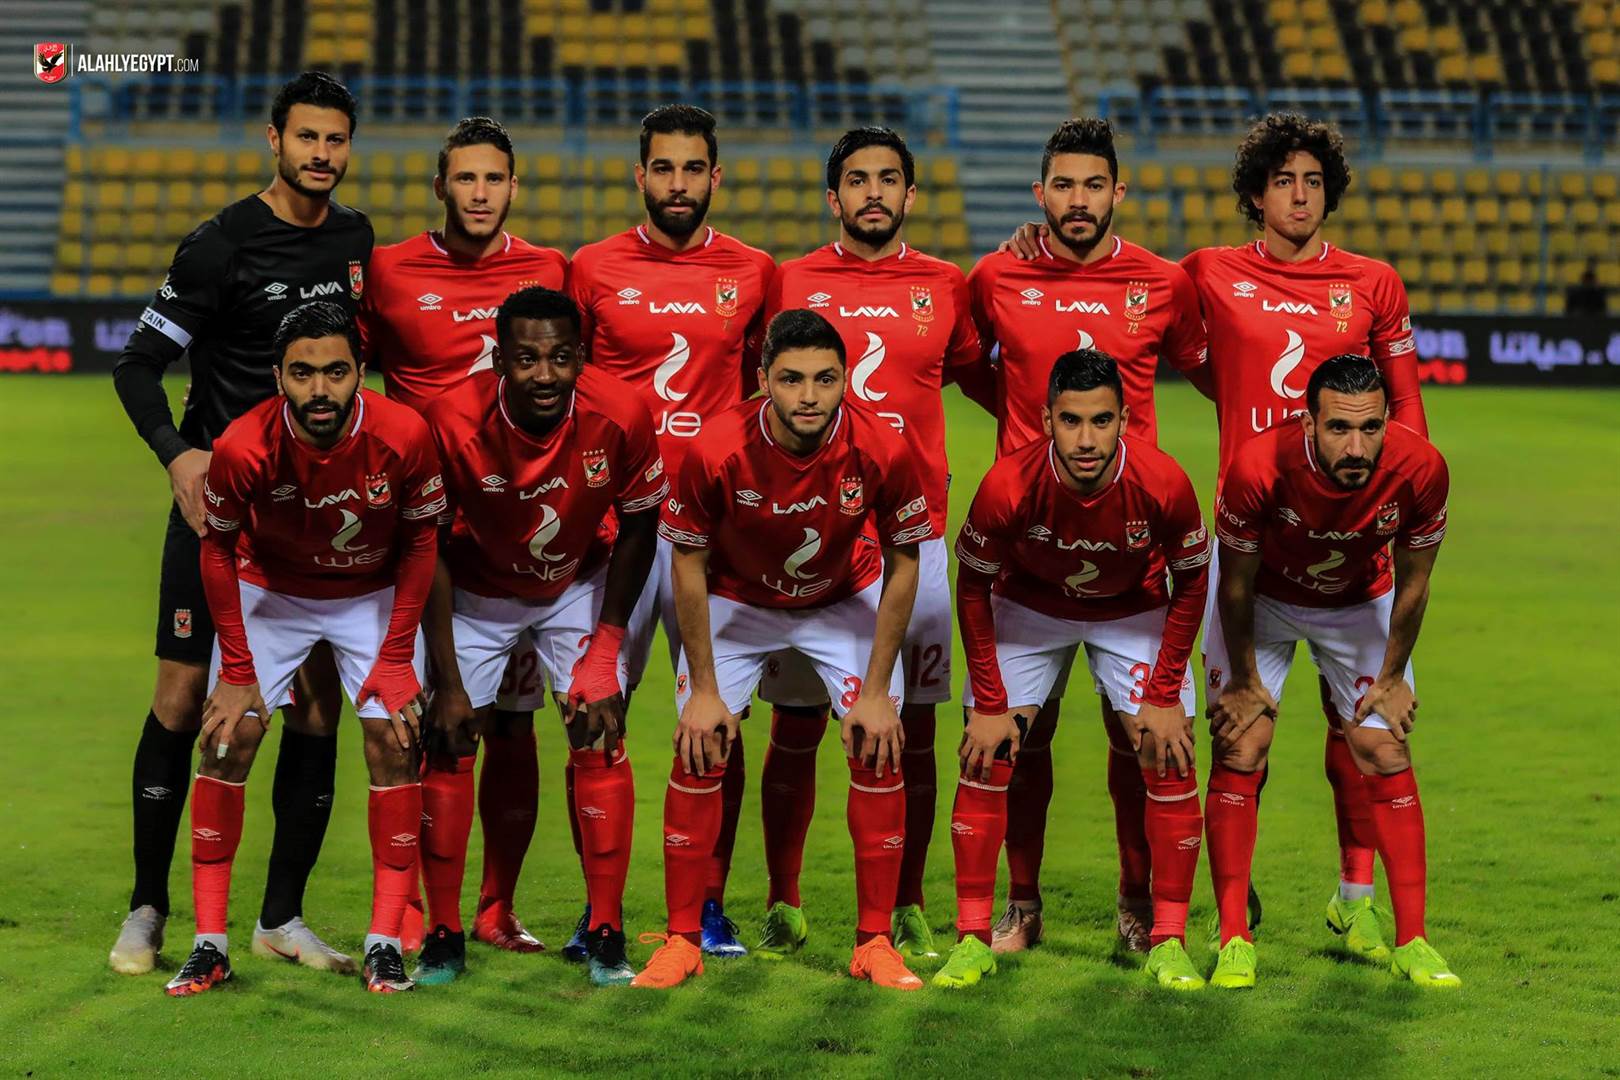 1. Al Ahly SC - Egypt - €31.7m (R526m)